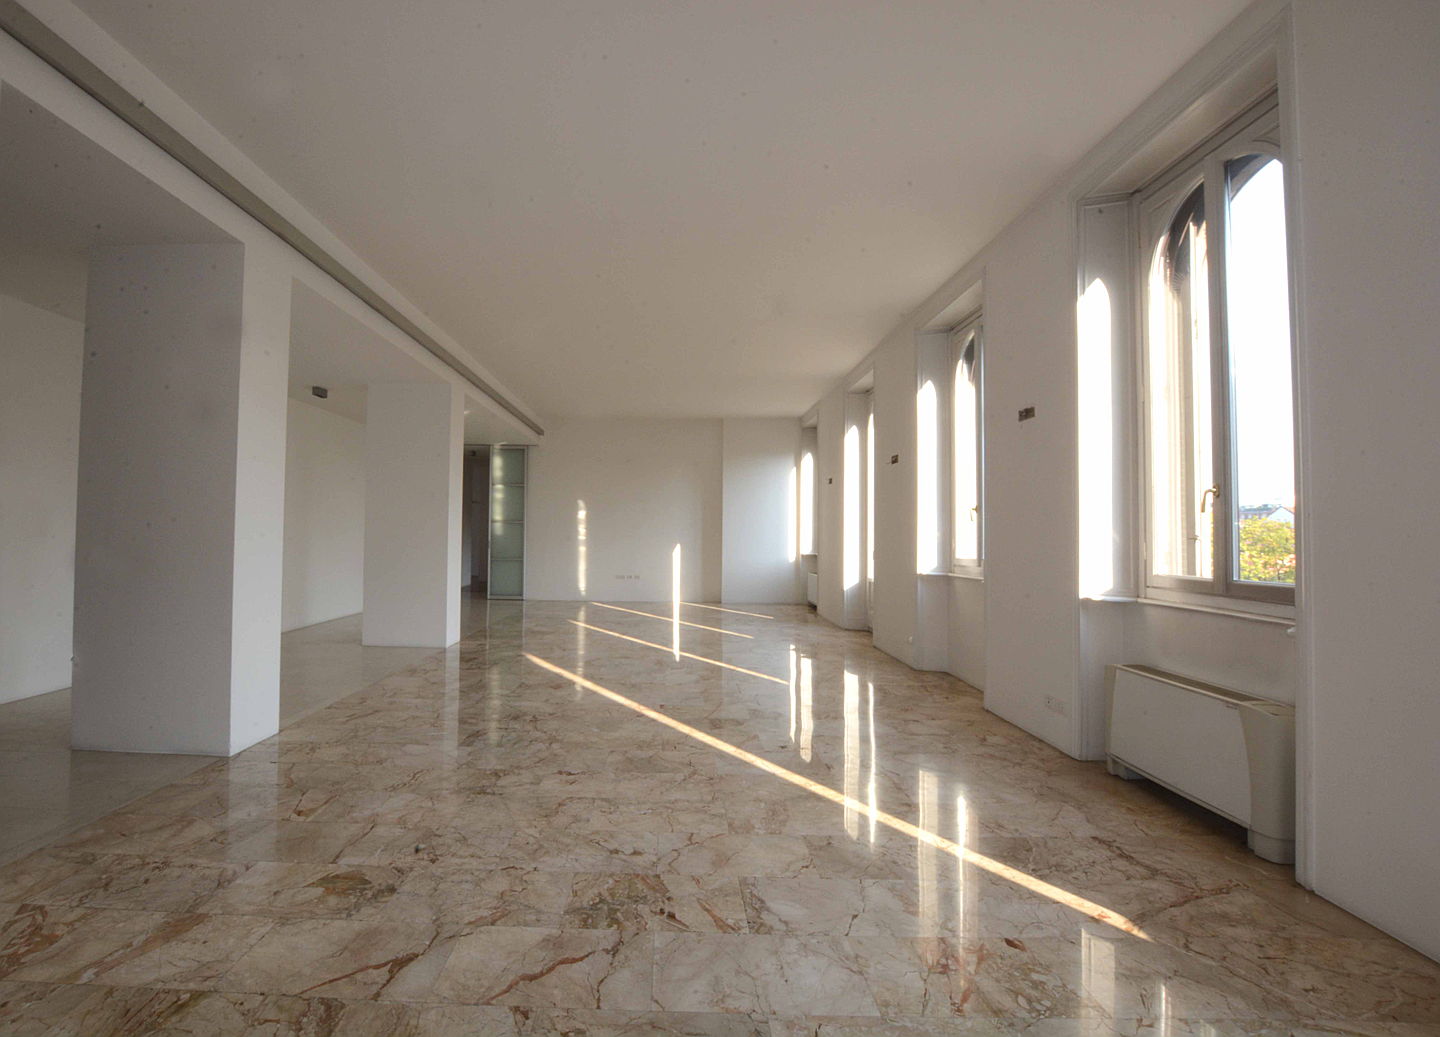  Mailand
- Appartamento_ViaBoccaccio_Living2.jpg